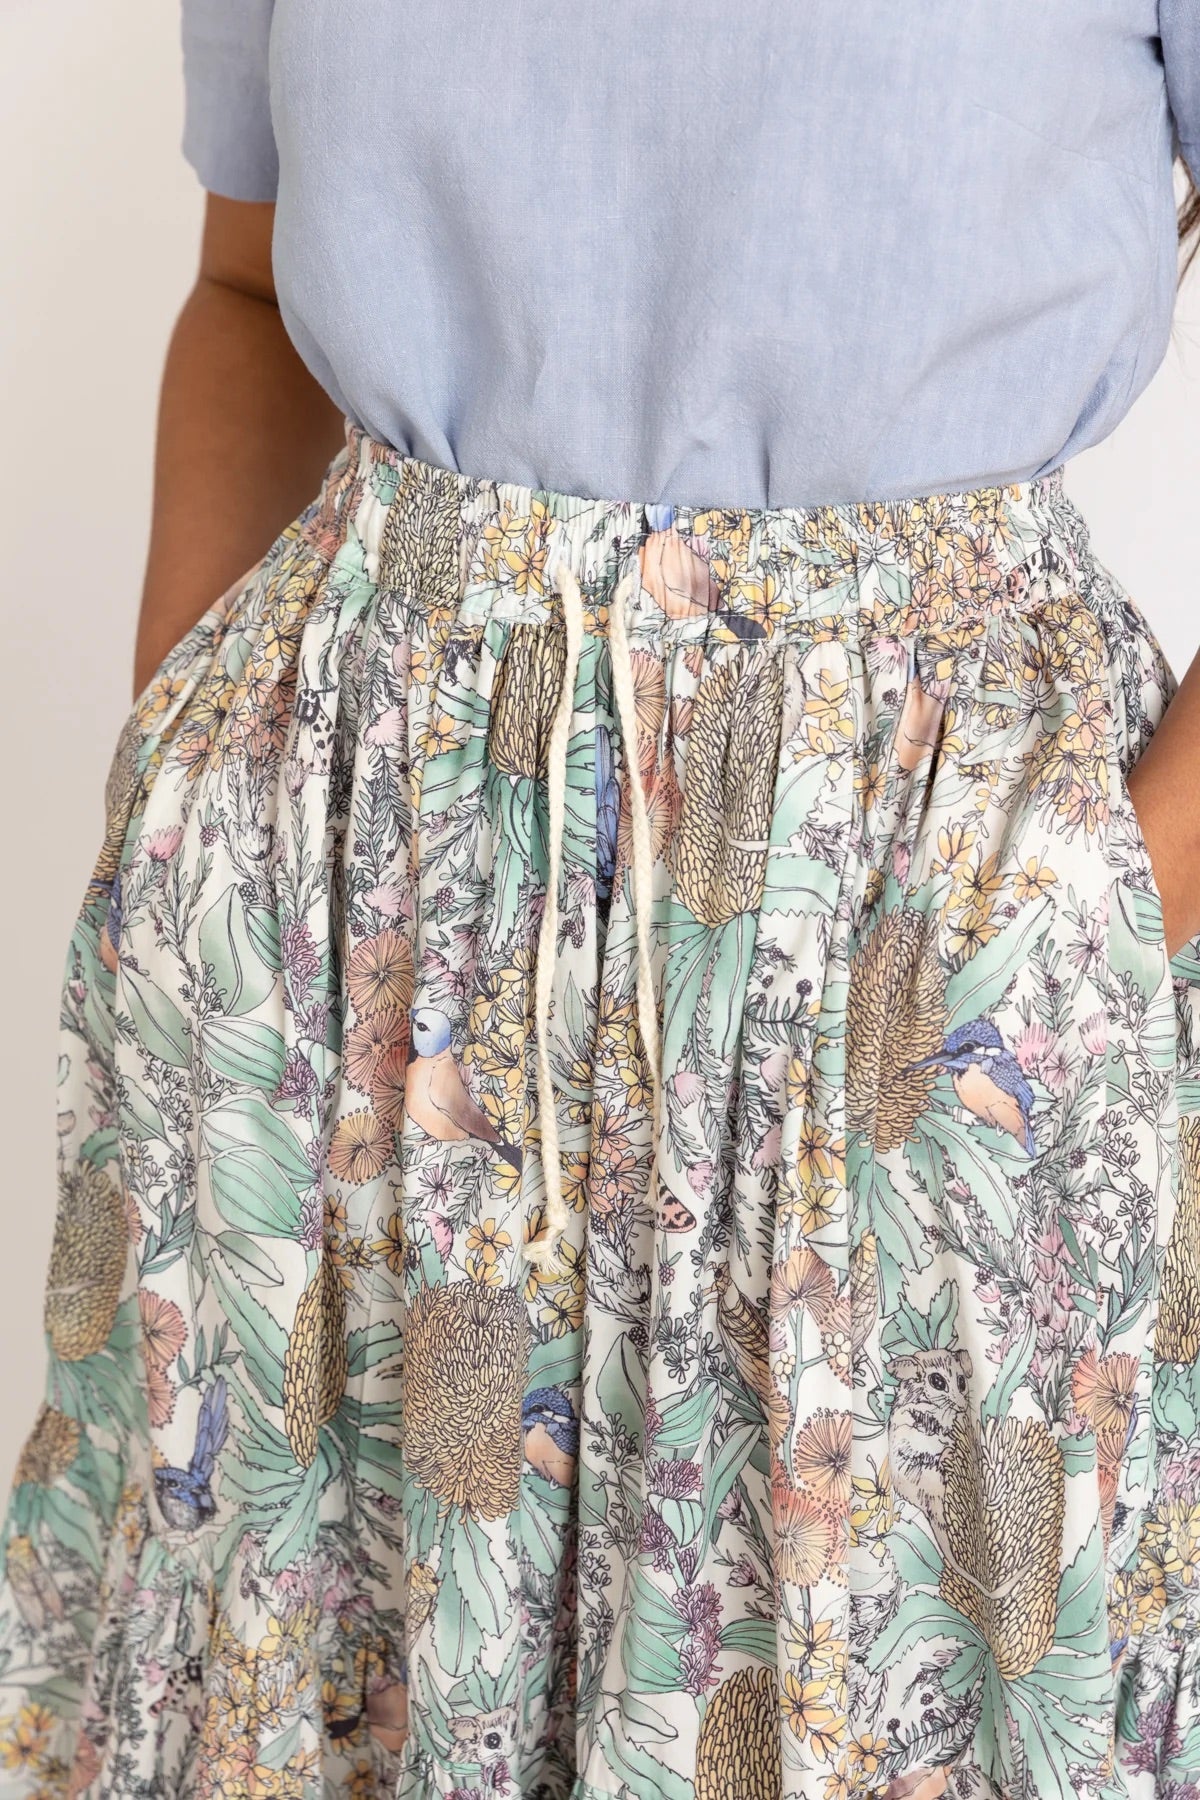 Megan Nielsen - Protea Capsule Wardrobe Sewing Pattern